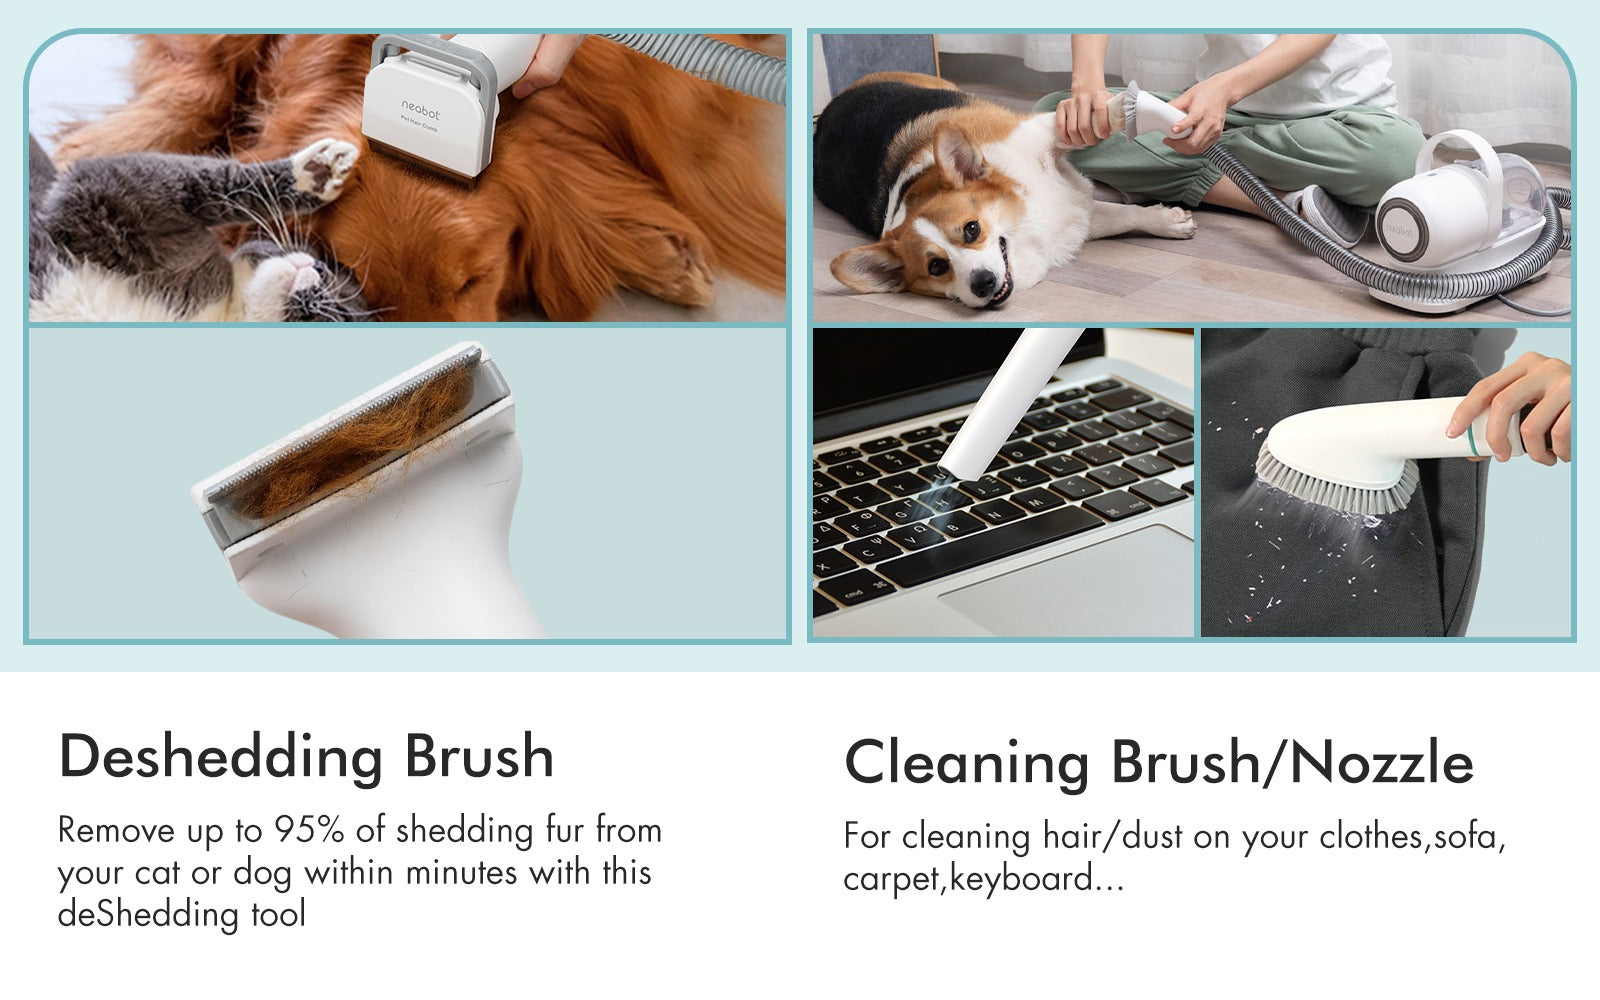 Neabot P1 Pro Pet Grooming Kit & Vacuum Suction